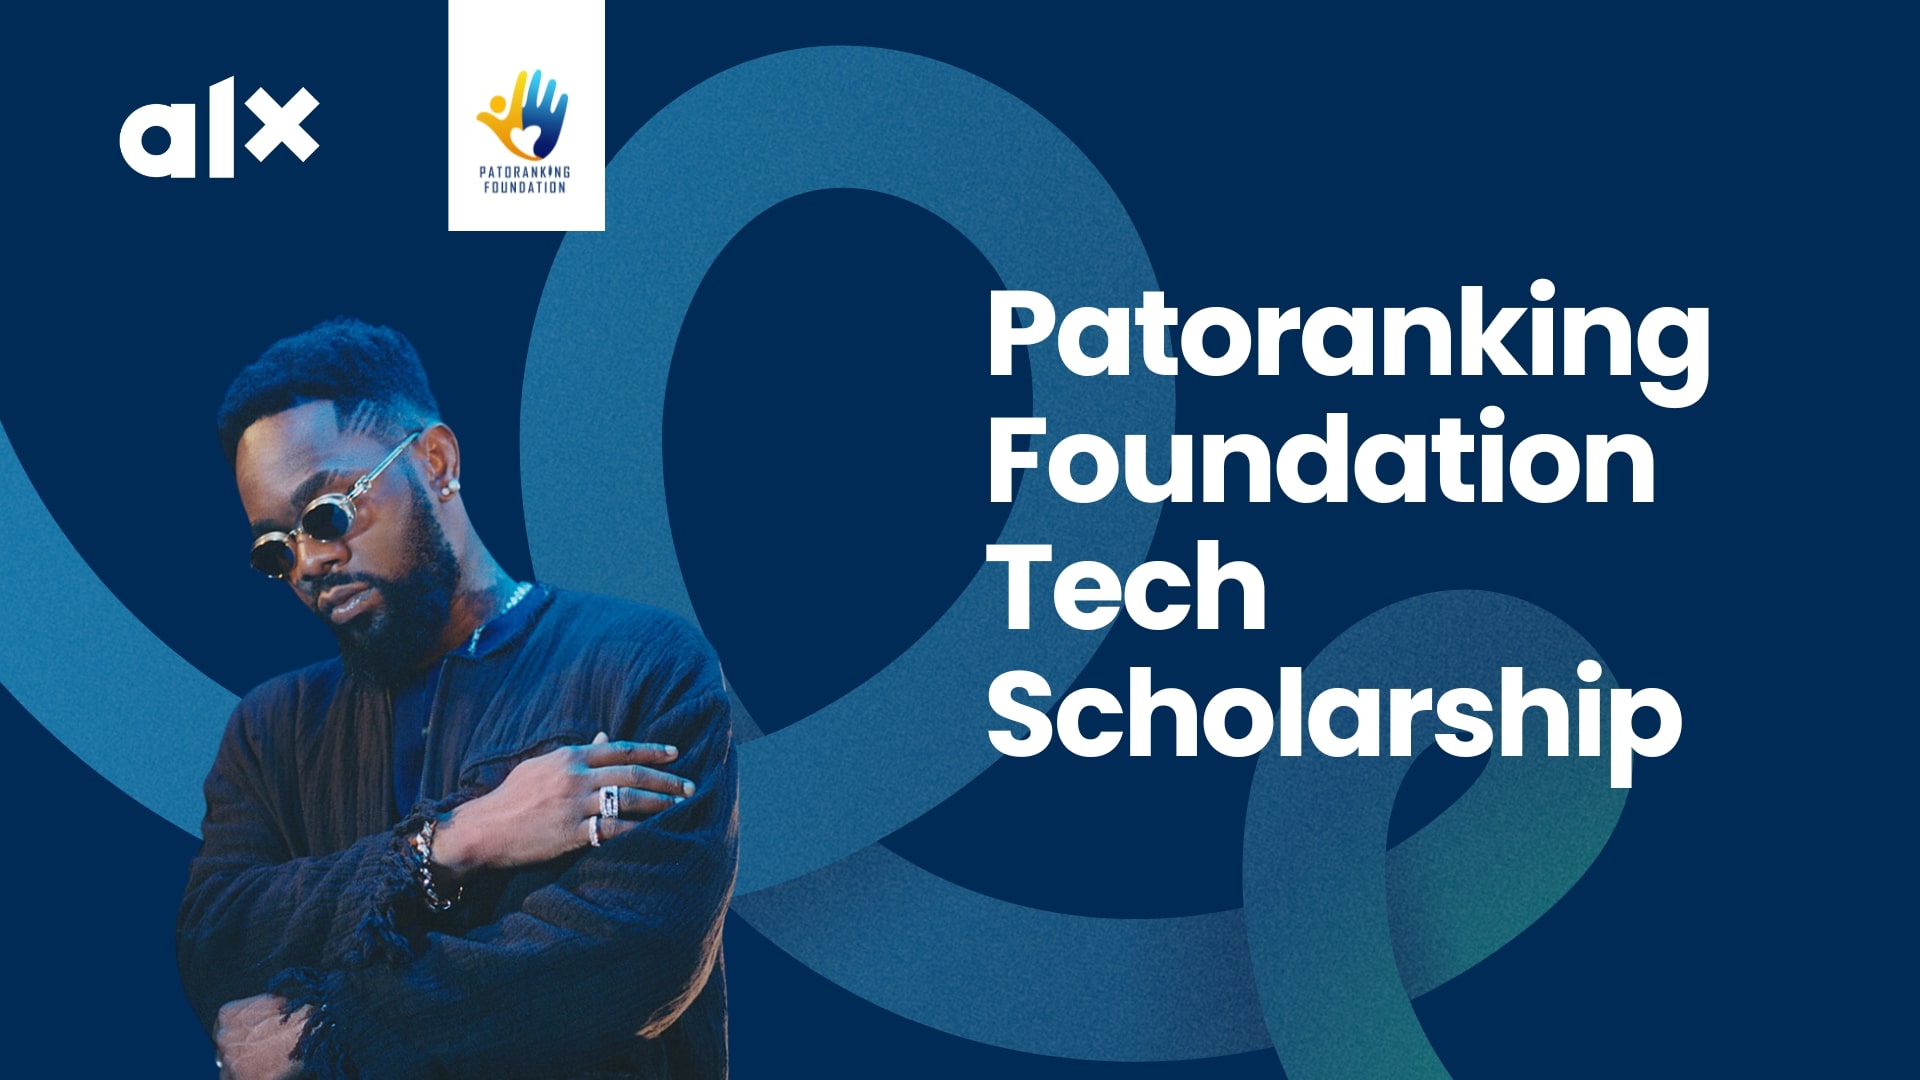 Patoraking Foundation Tech Scholarship